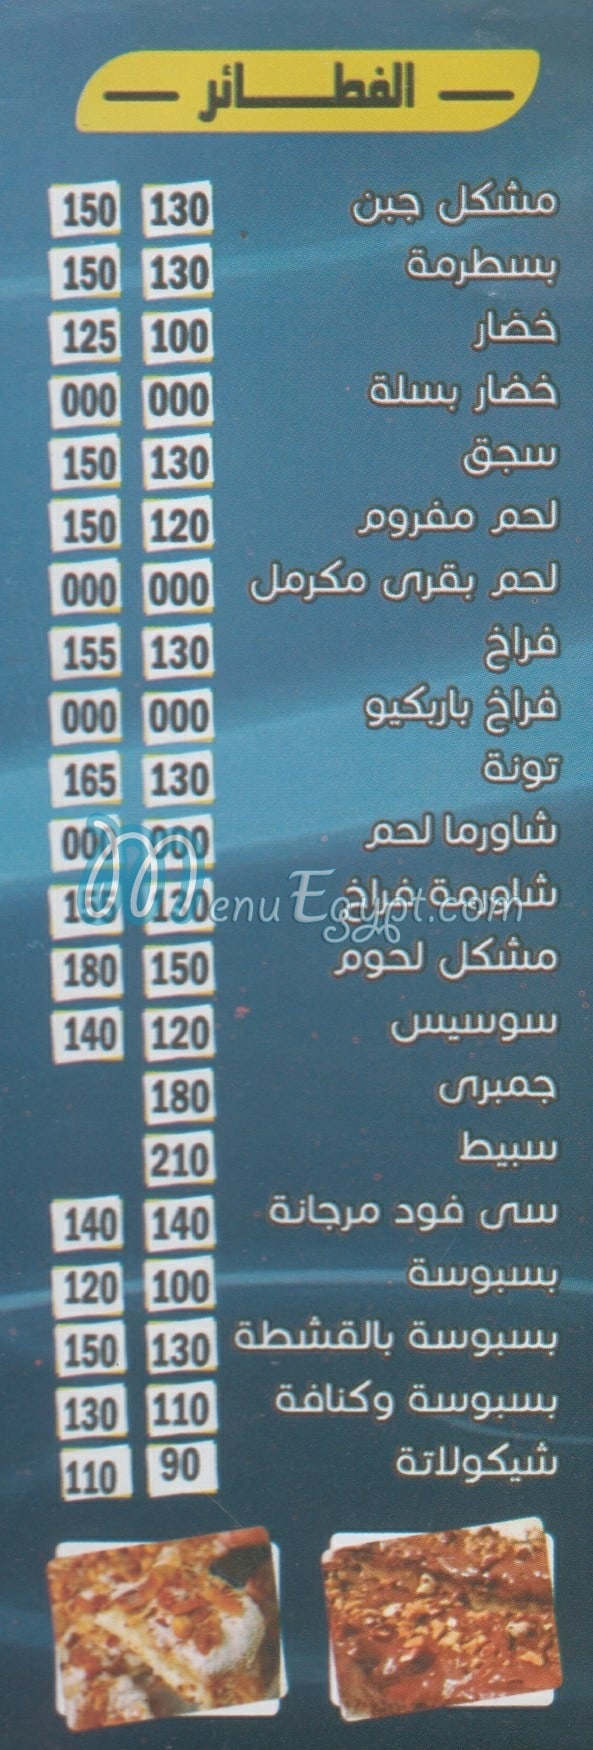 Morgana menu Egypt 3